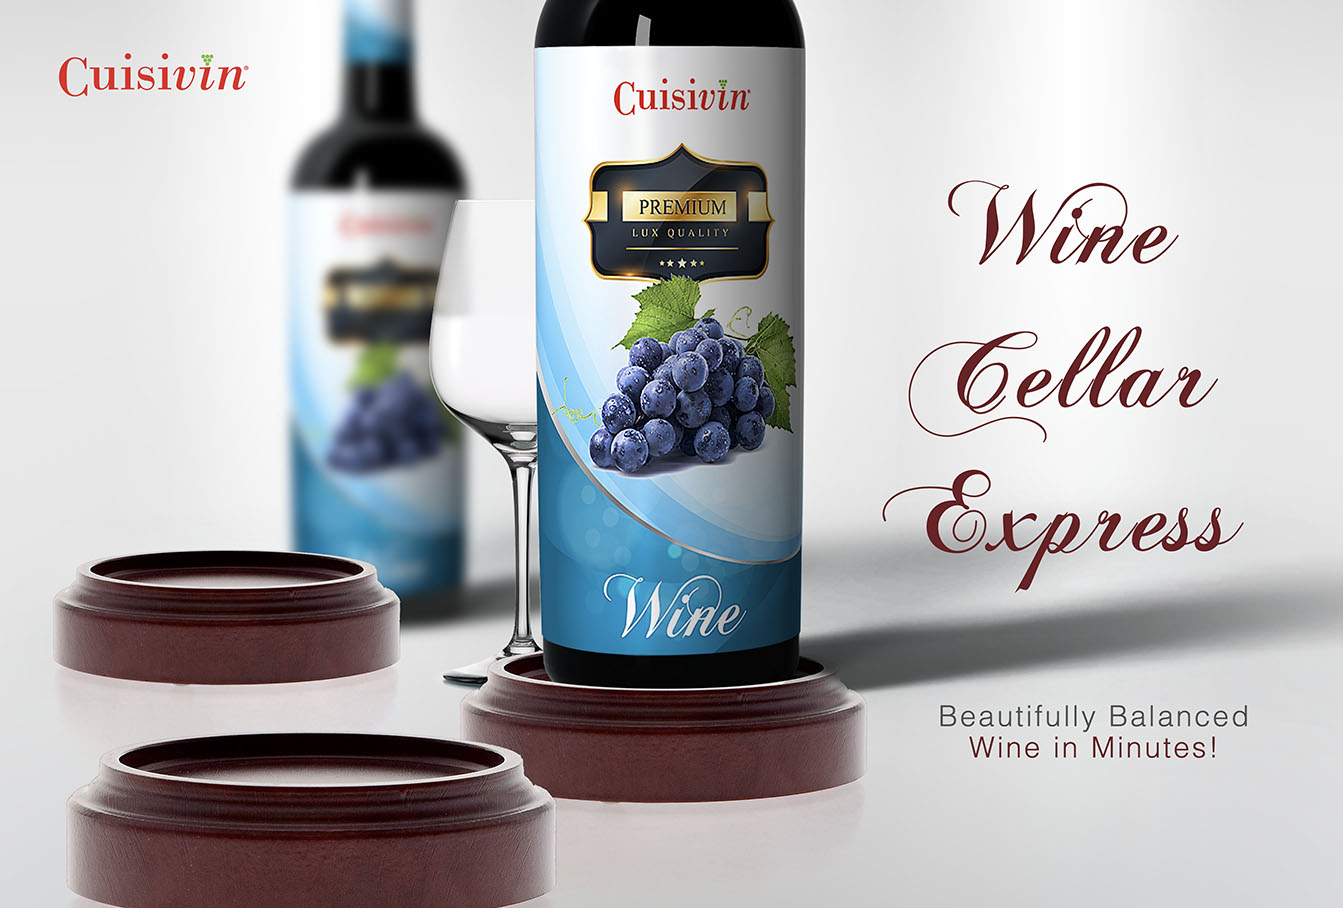 Wine Cellar Express